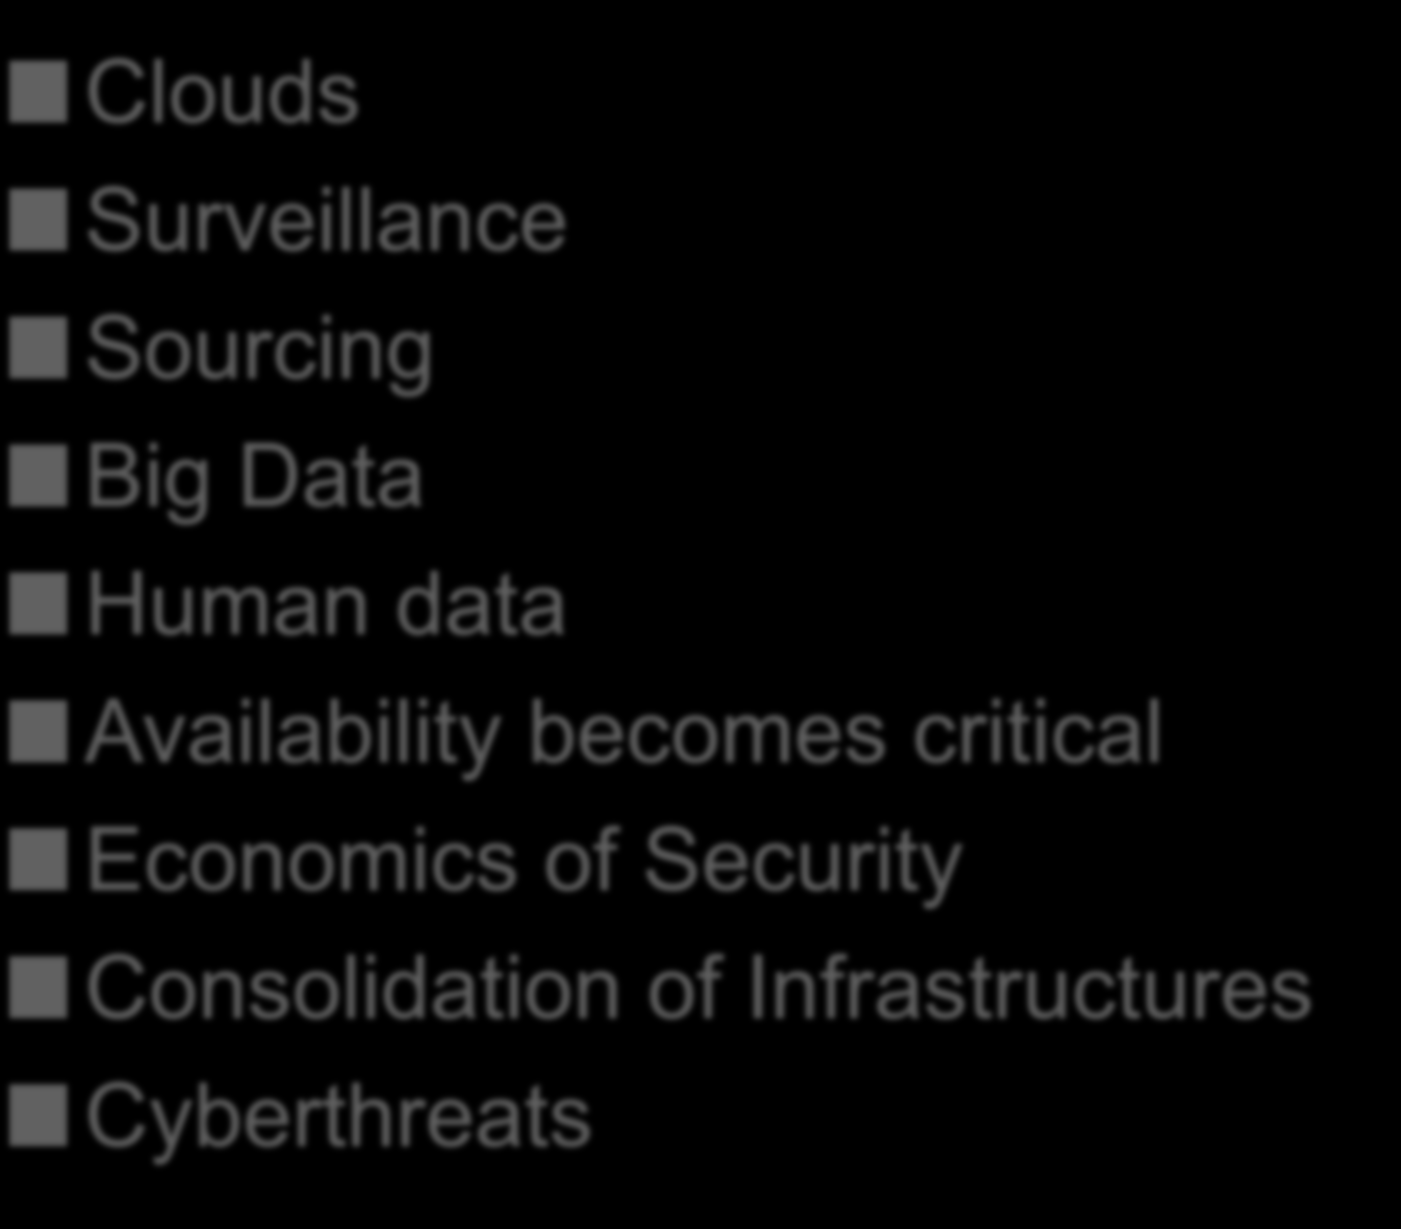 The Changing InfoSec Scene Clouds Surveillance Sourcing Big Data Human data